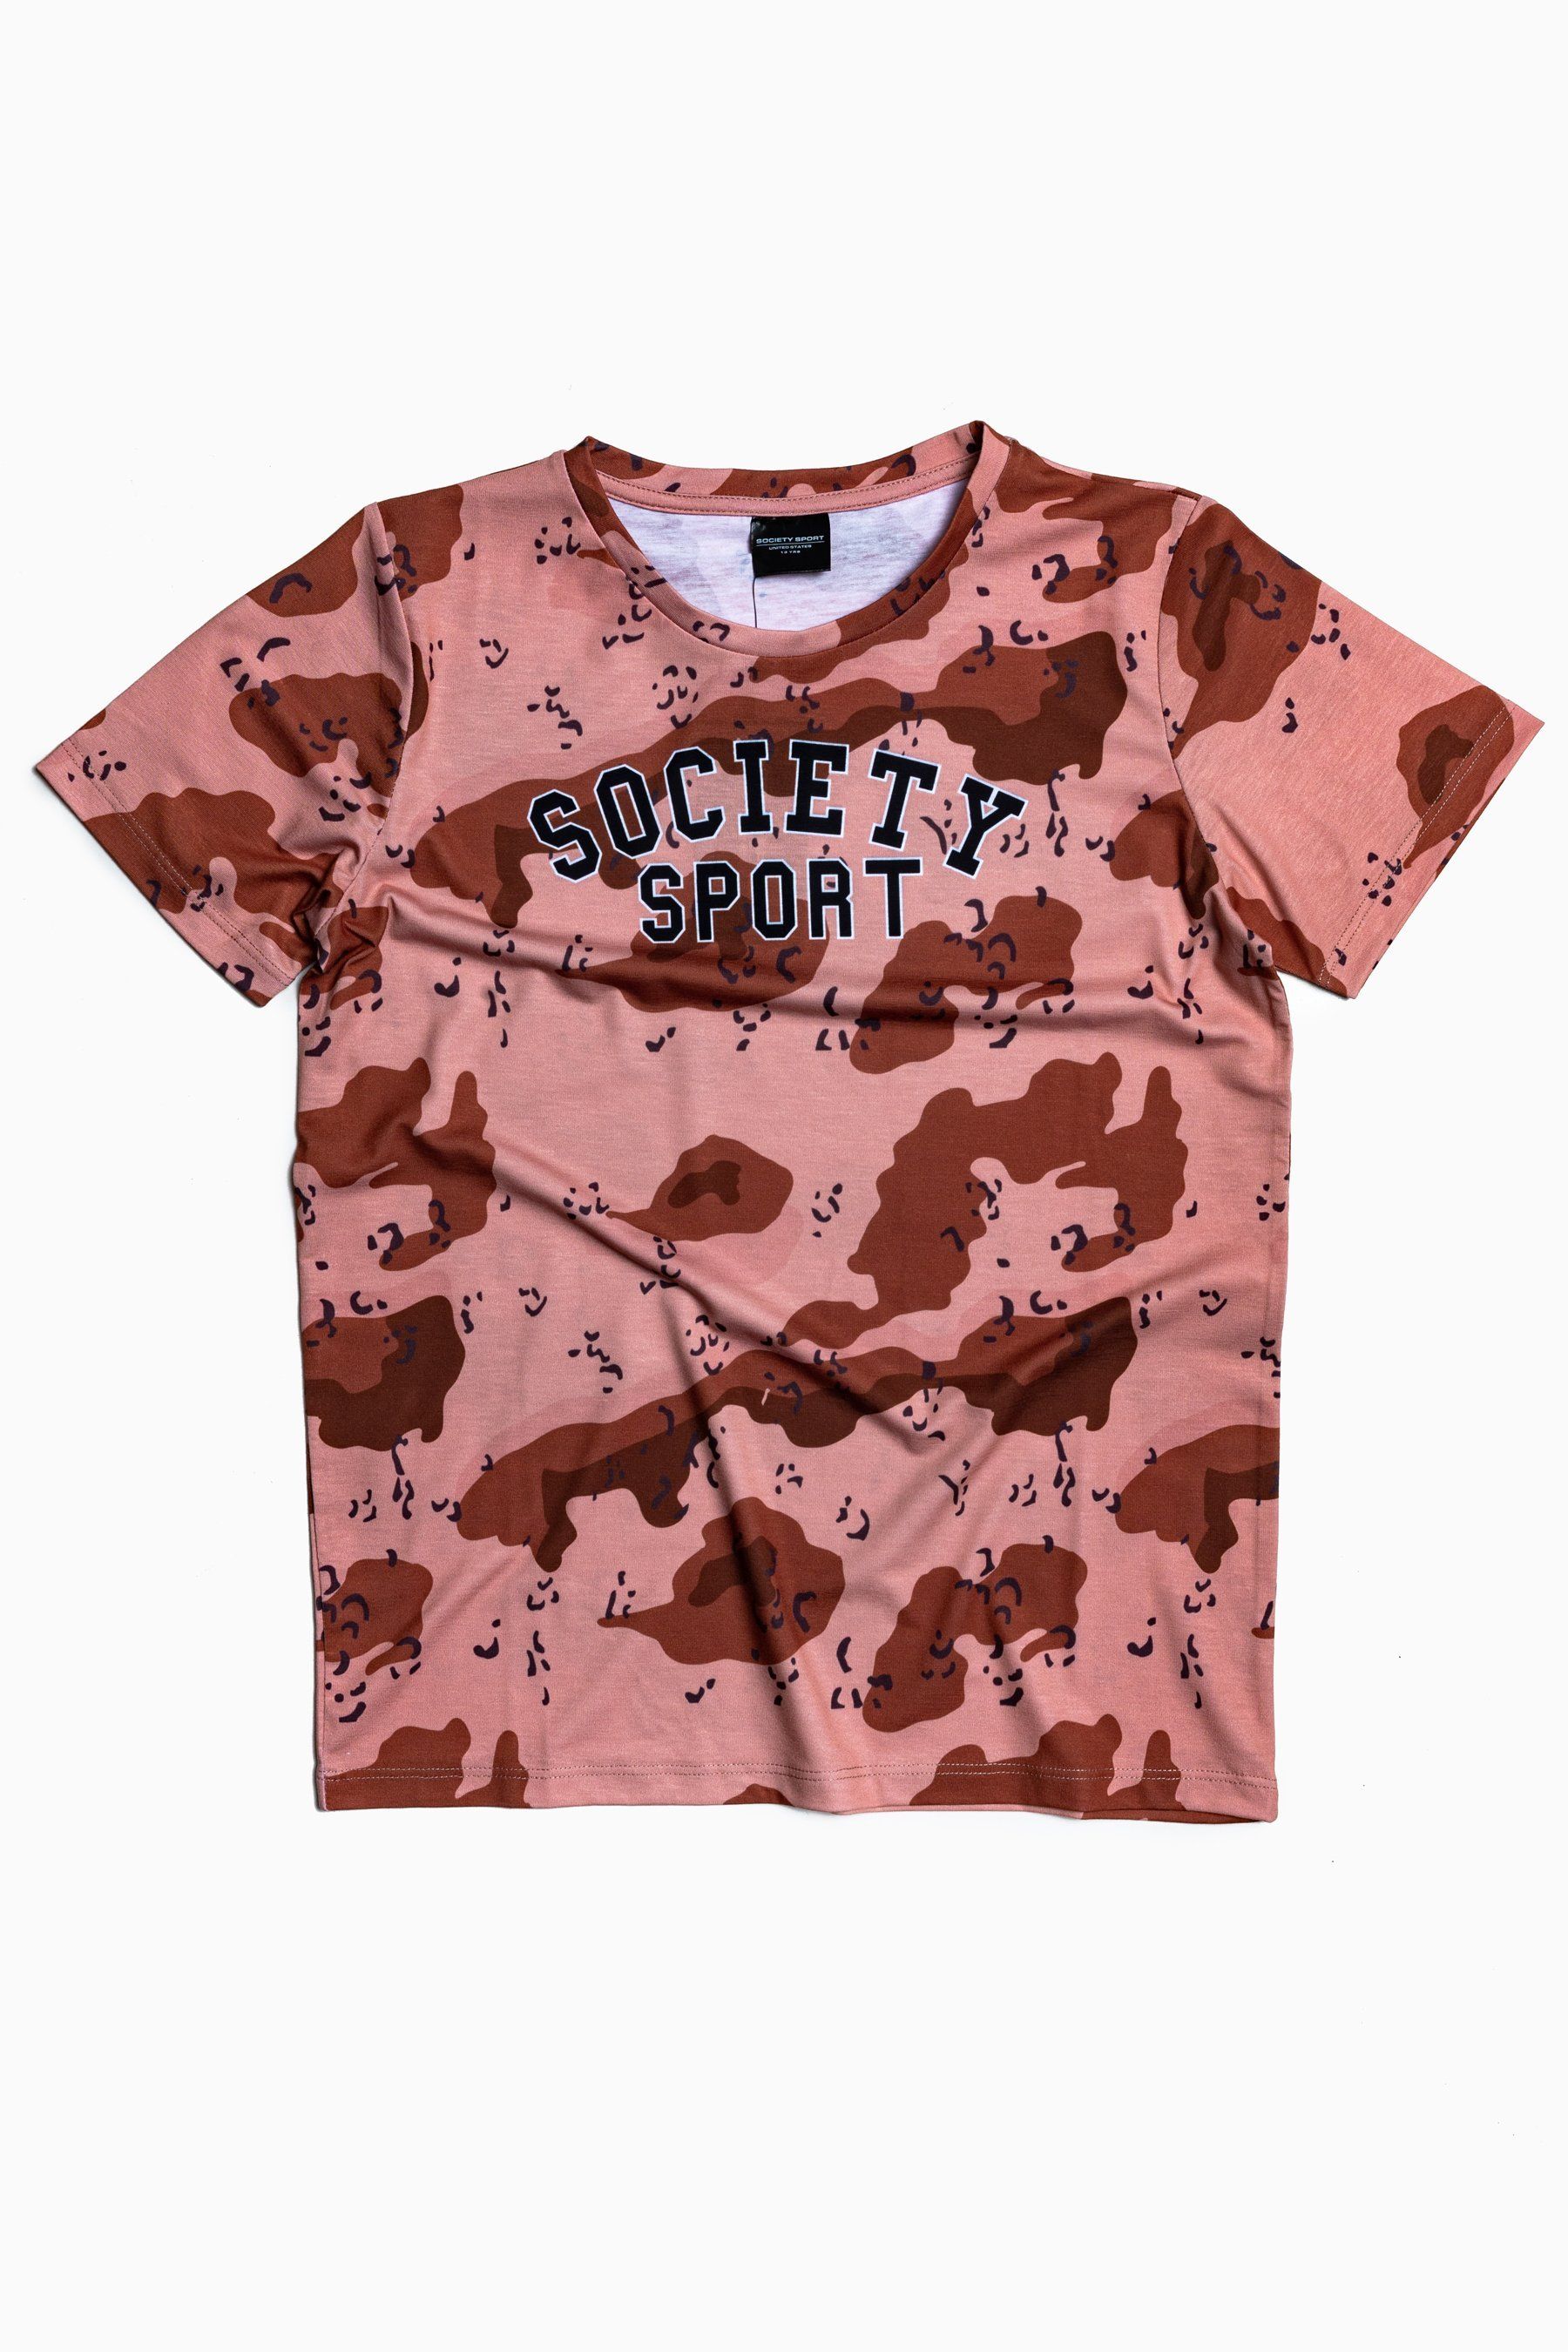 Society Sport Sand Camo T-Shirt